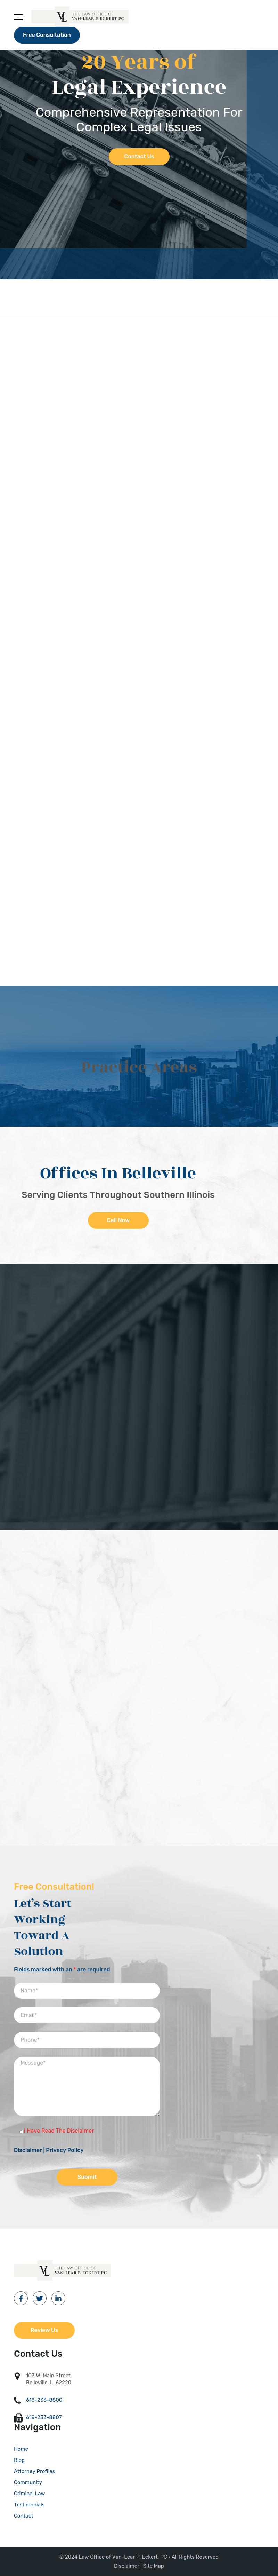 The Law Office of Van-Lear P. Eckert, PC - Belleville IL Lawyers